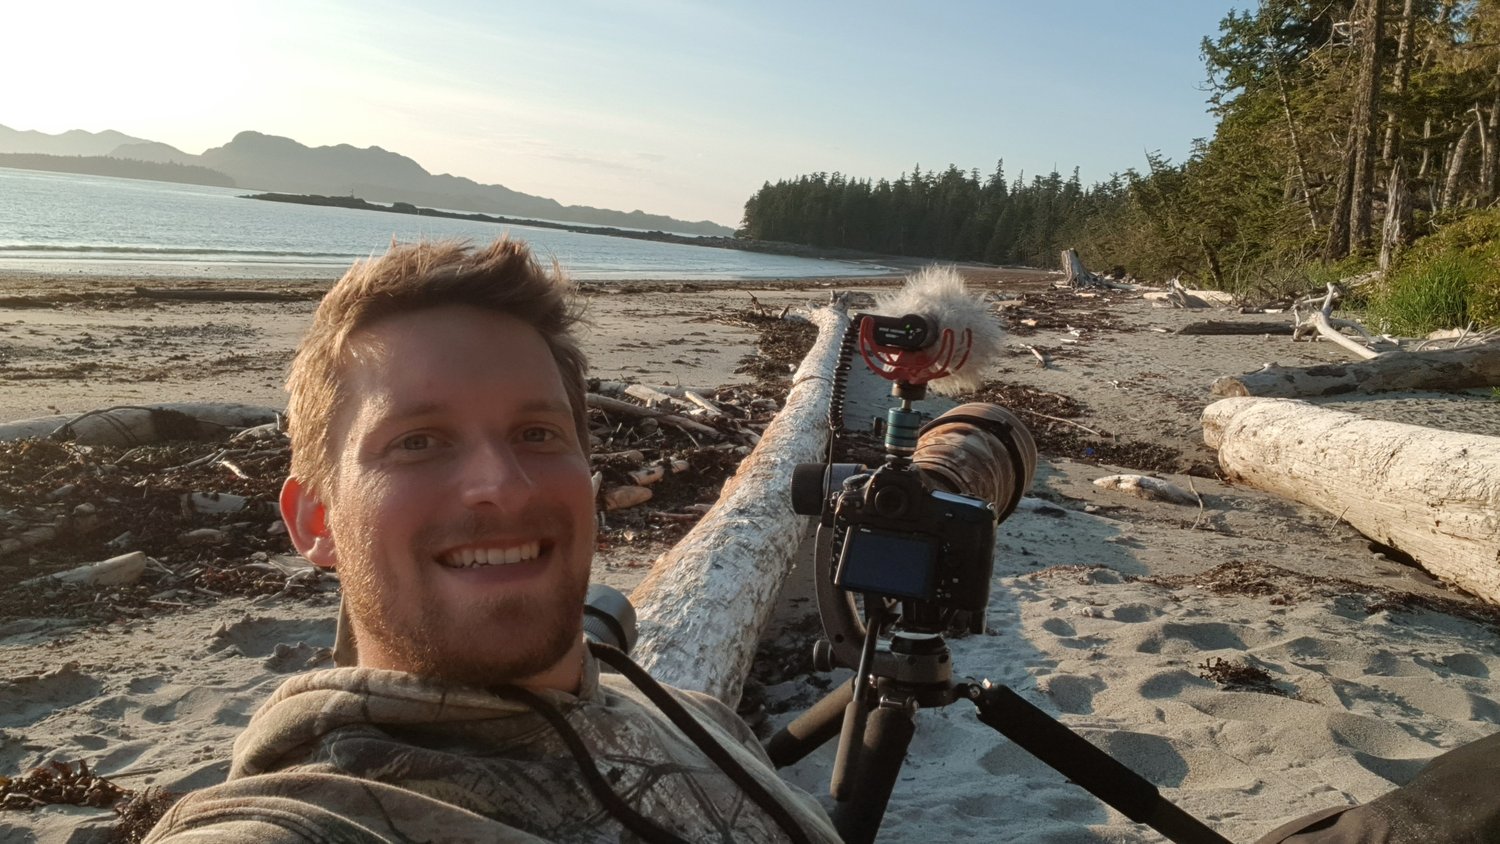 Globetrotting Conservation with Fabian Muhlberger